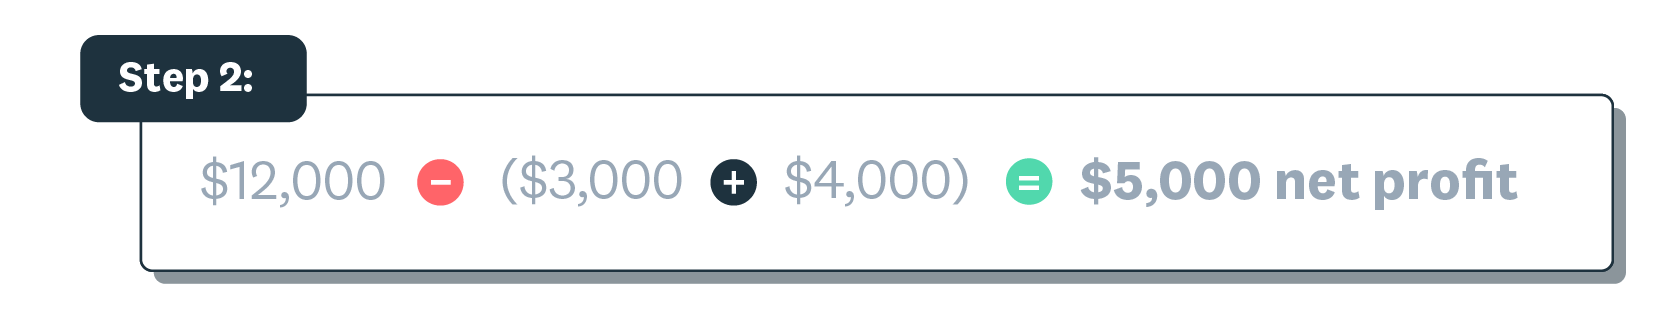 Step 2 example shows $12,000 minus the sum of $3,000 plus $4,000, equals $5,000 net profit.